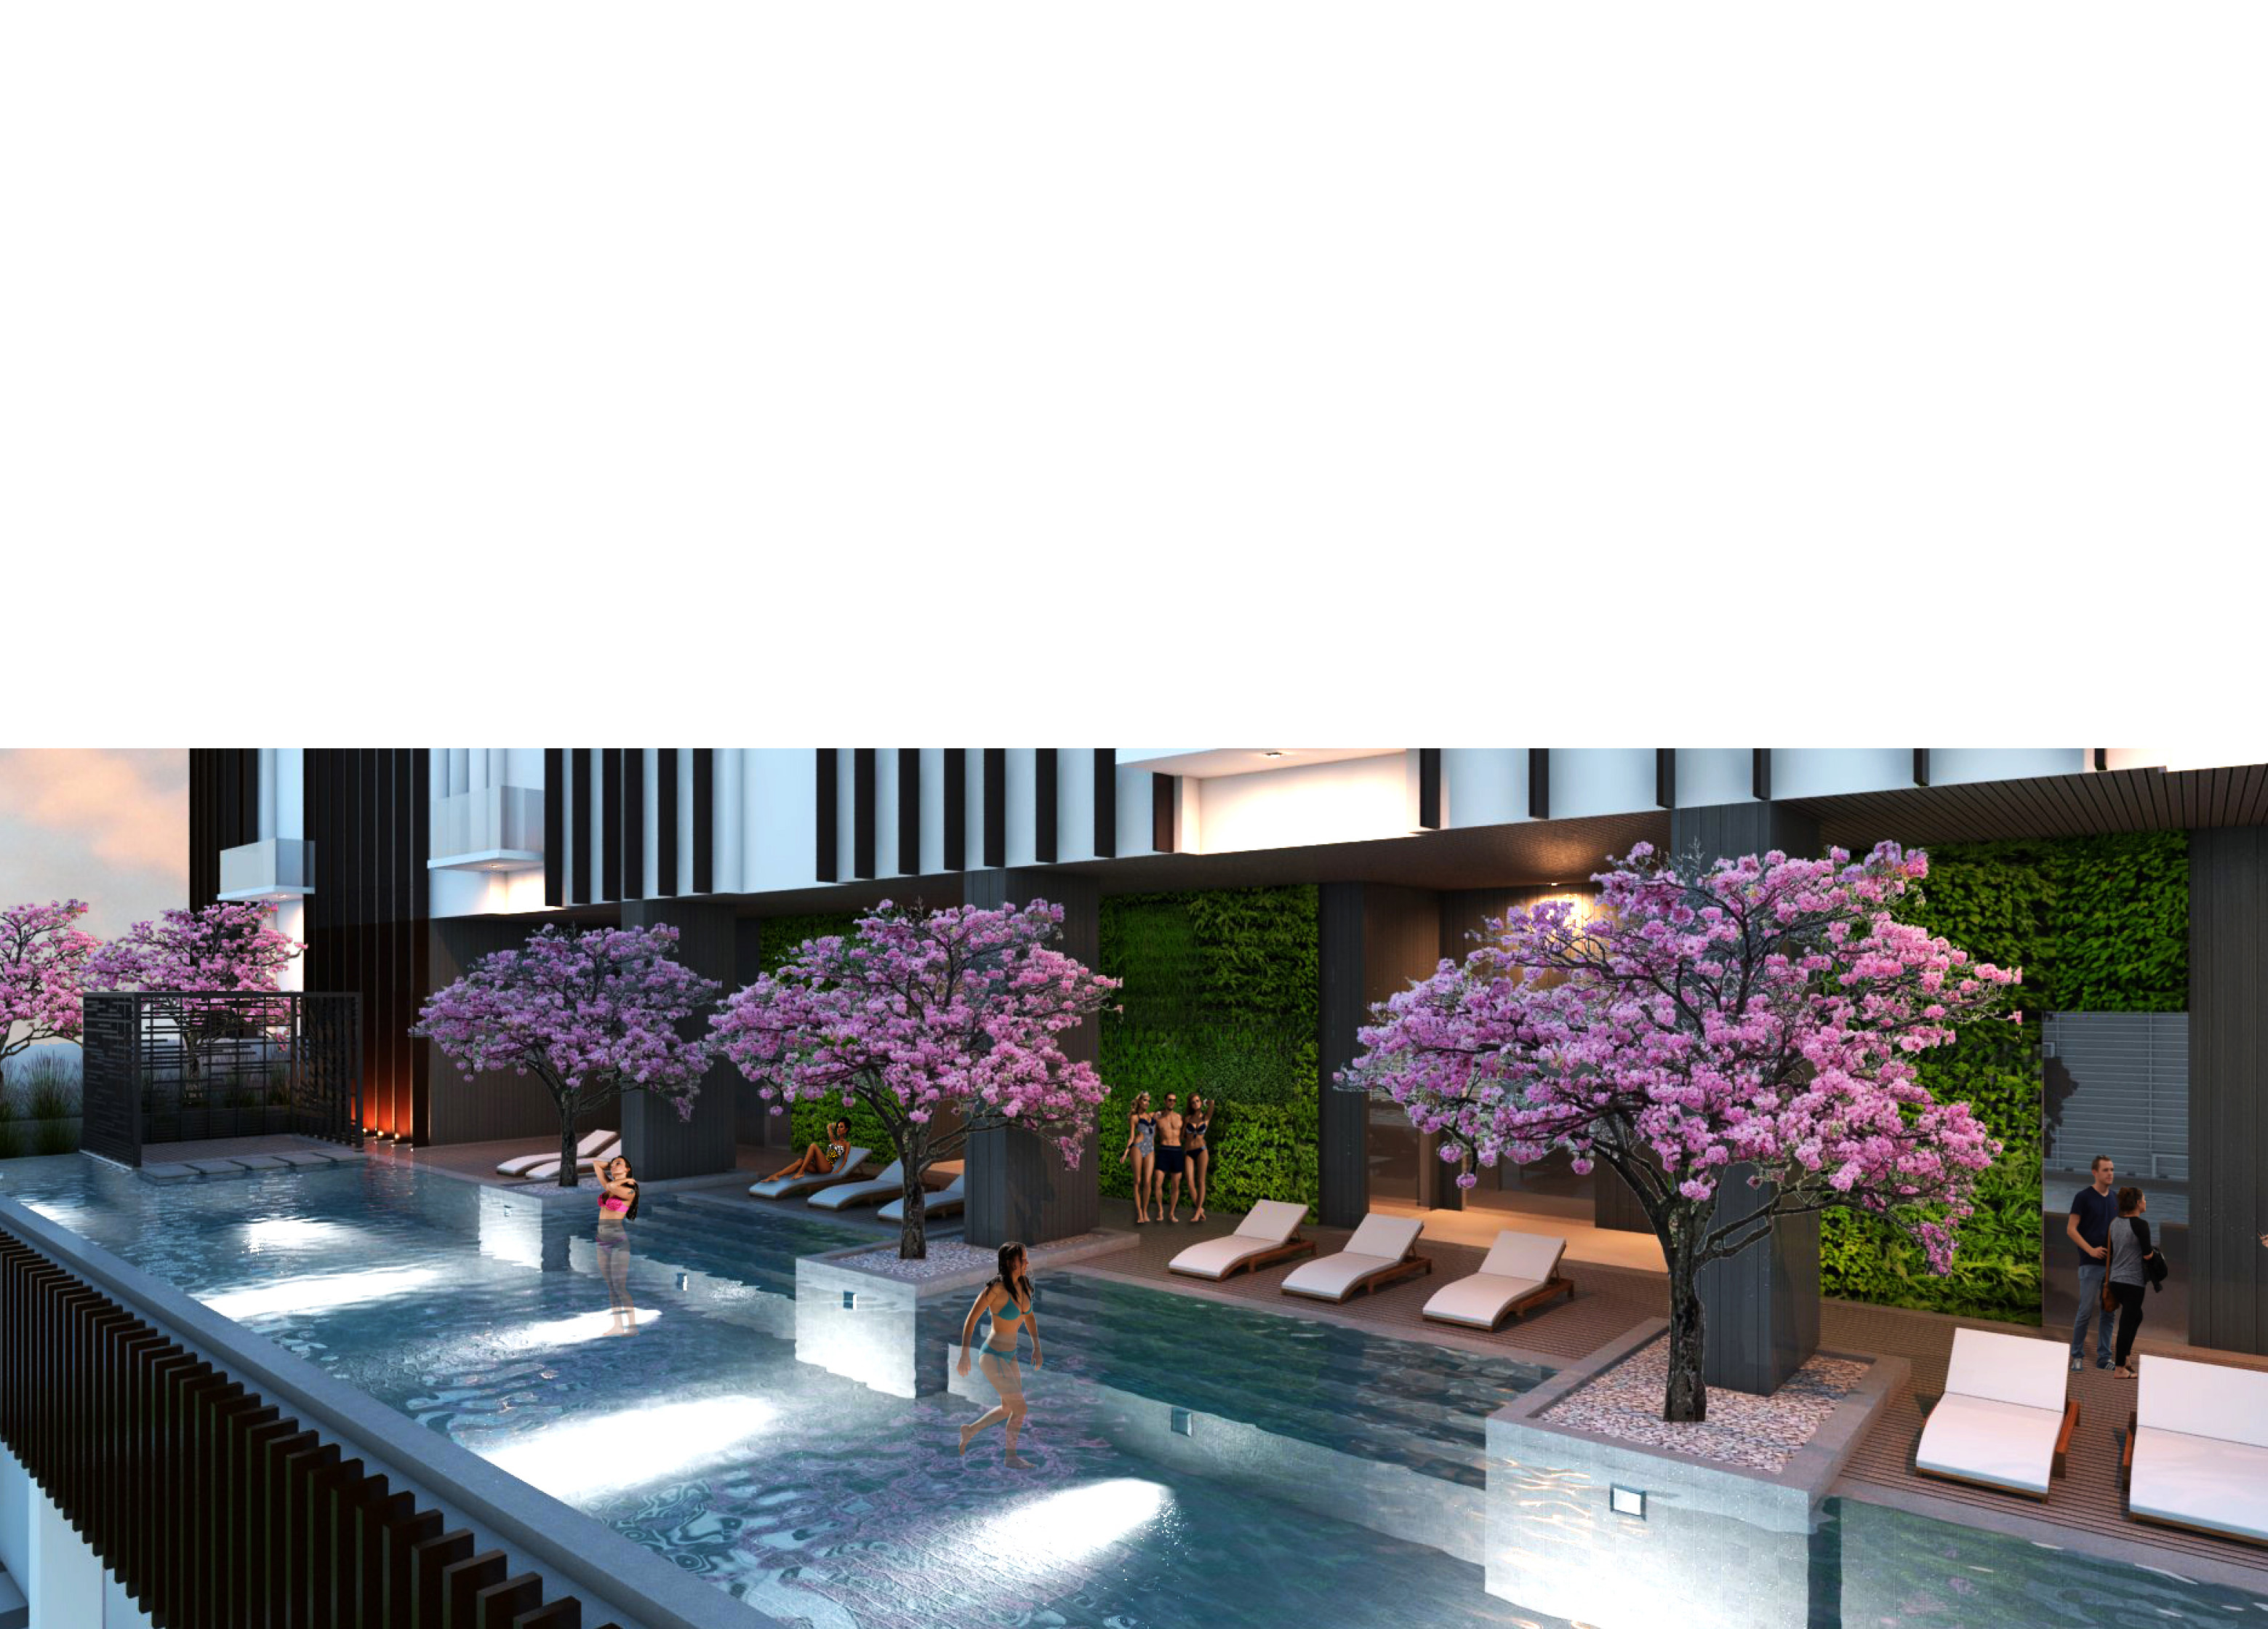 Pool terrace - concept design study